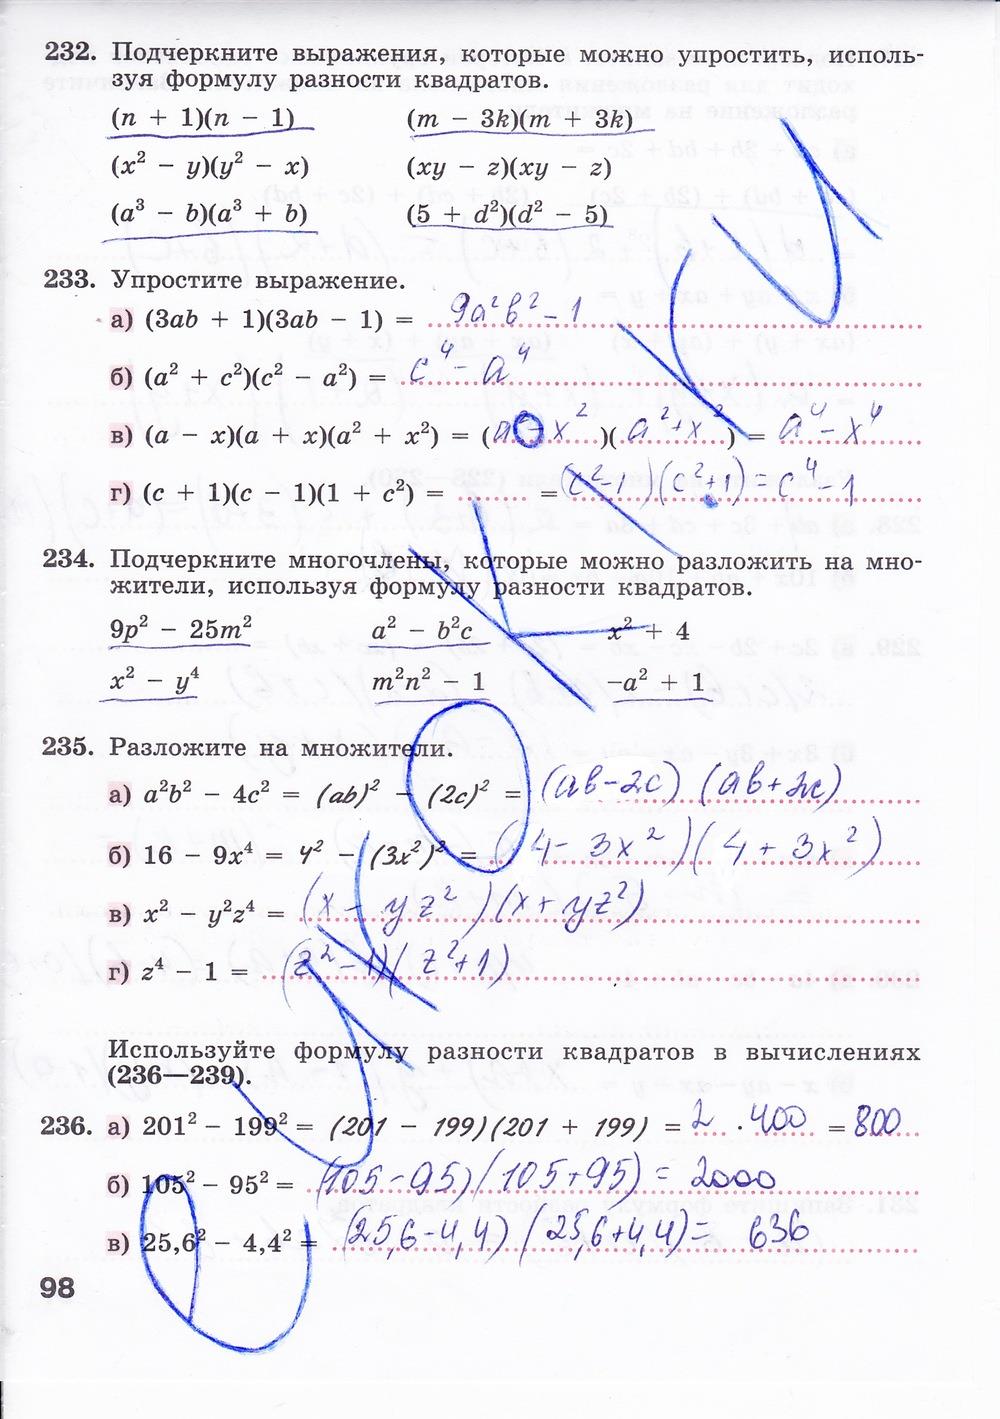 гдз 7 класс рабочая тетрадь страница 98 алгебра Минаева, Рослова